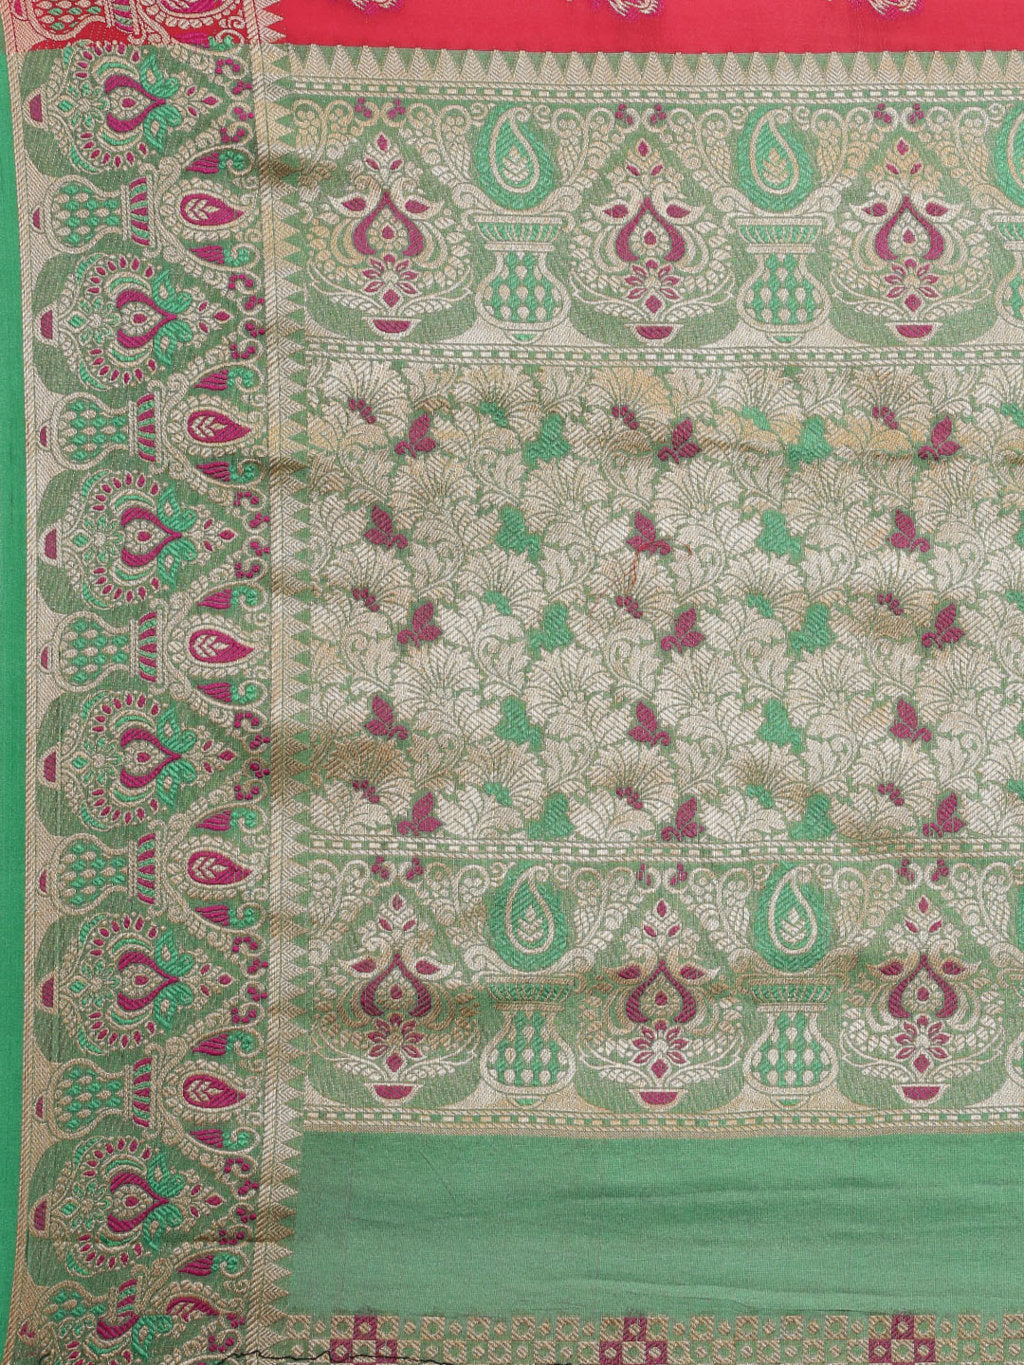 Women's Red Heavy Banarasi Silk Woven Work Traditional Saree - Sangam Prints